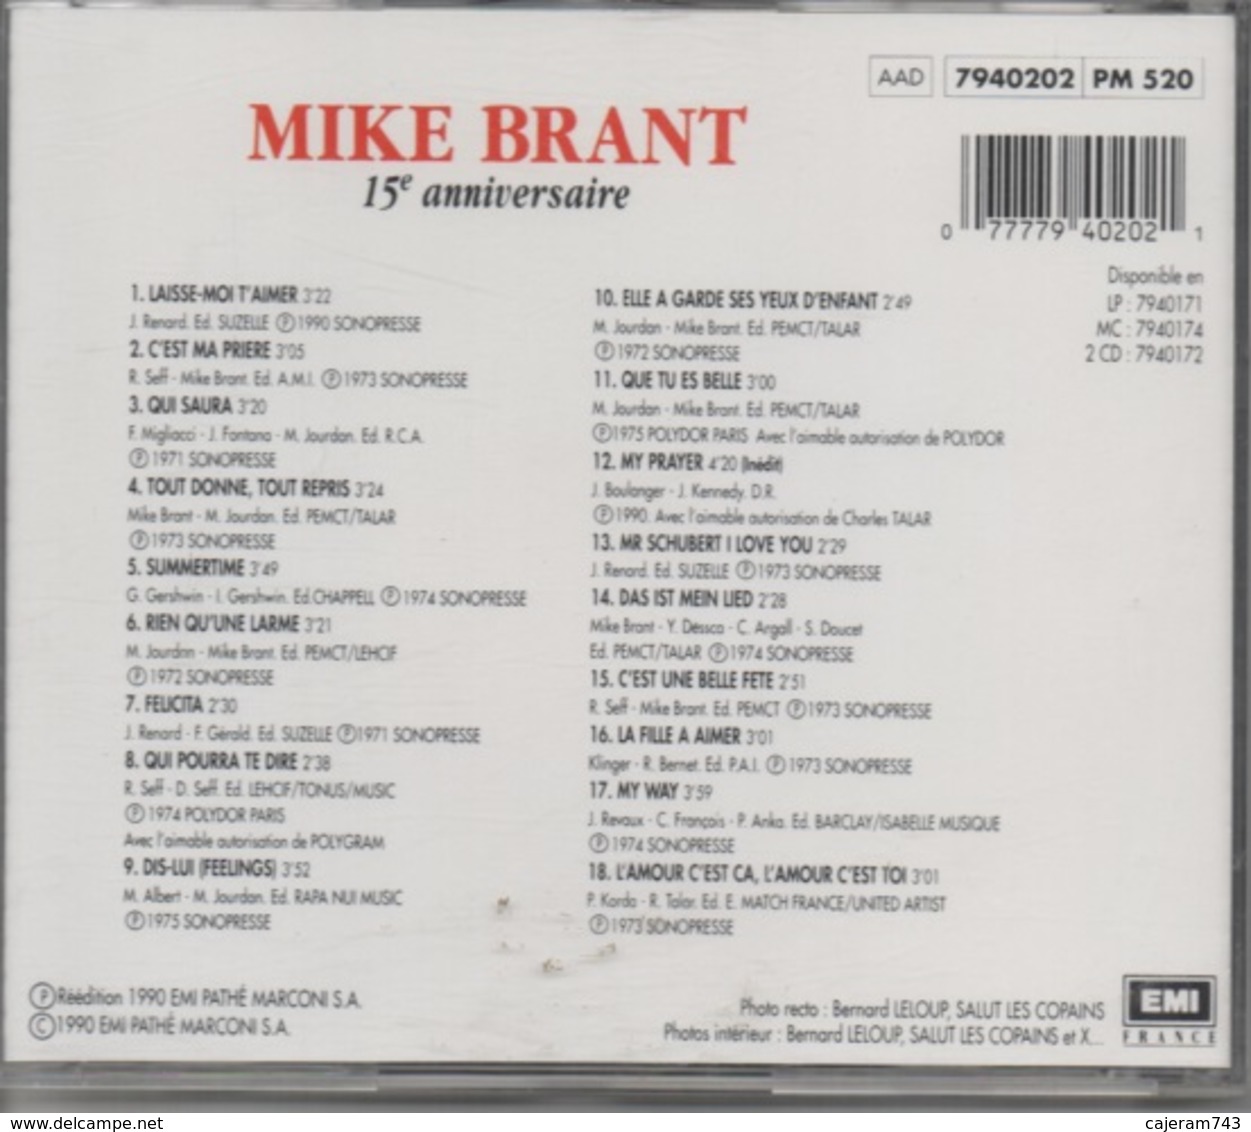 CD. MIKE BRANT. 15e Anniversaire - 18 Versions Originales - Inclus : "My Prayer" - Qui Saura - My Way (Claude FRANCOIS) - Compilations